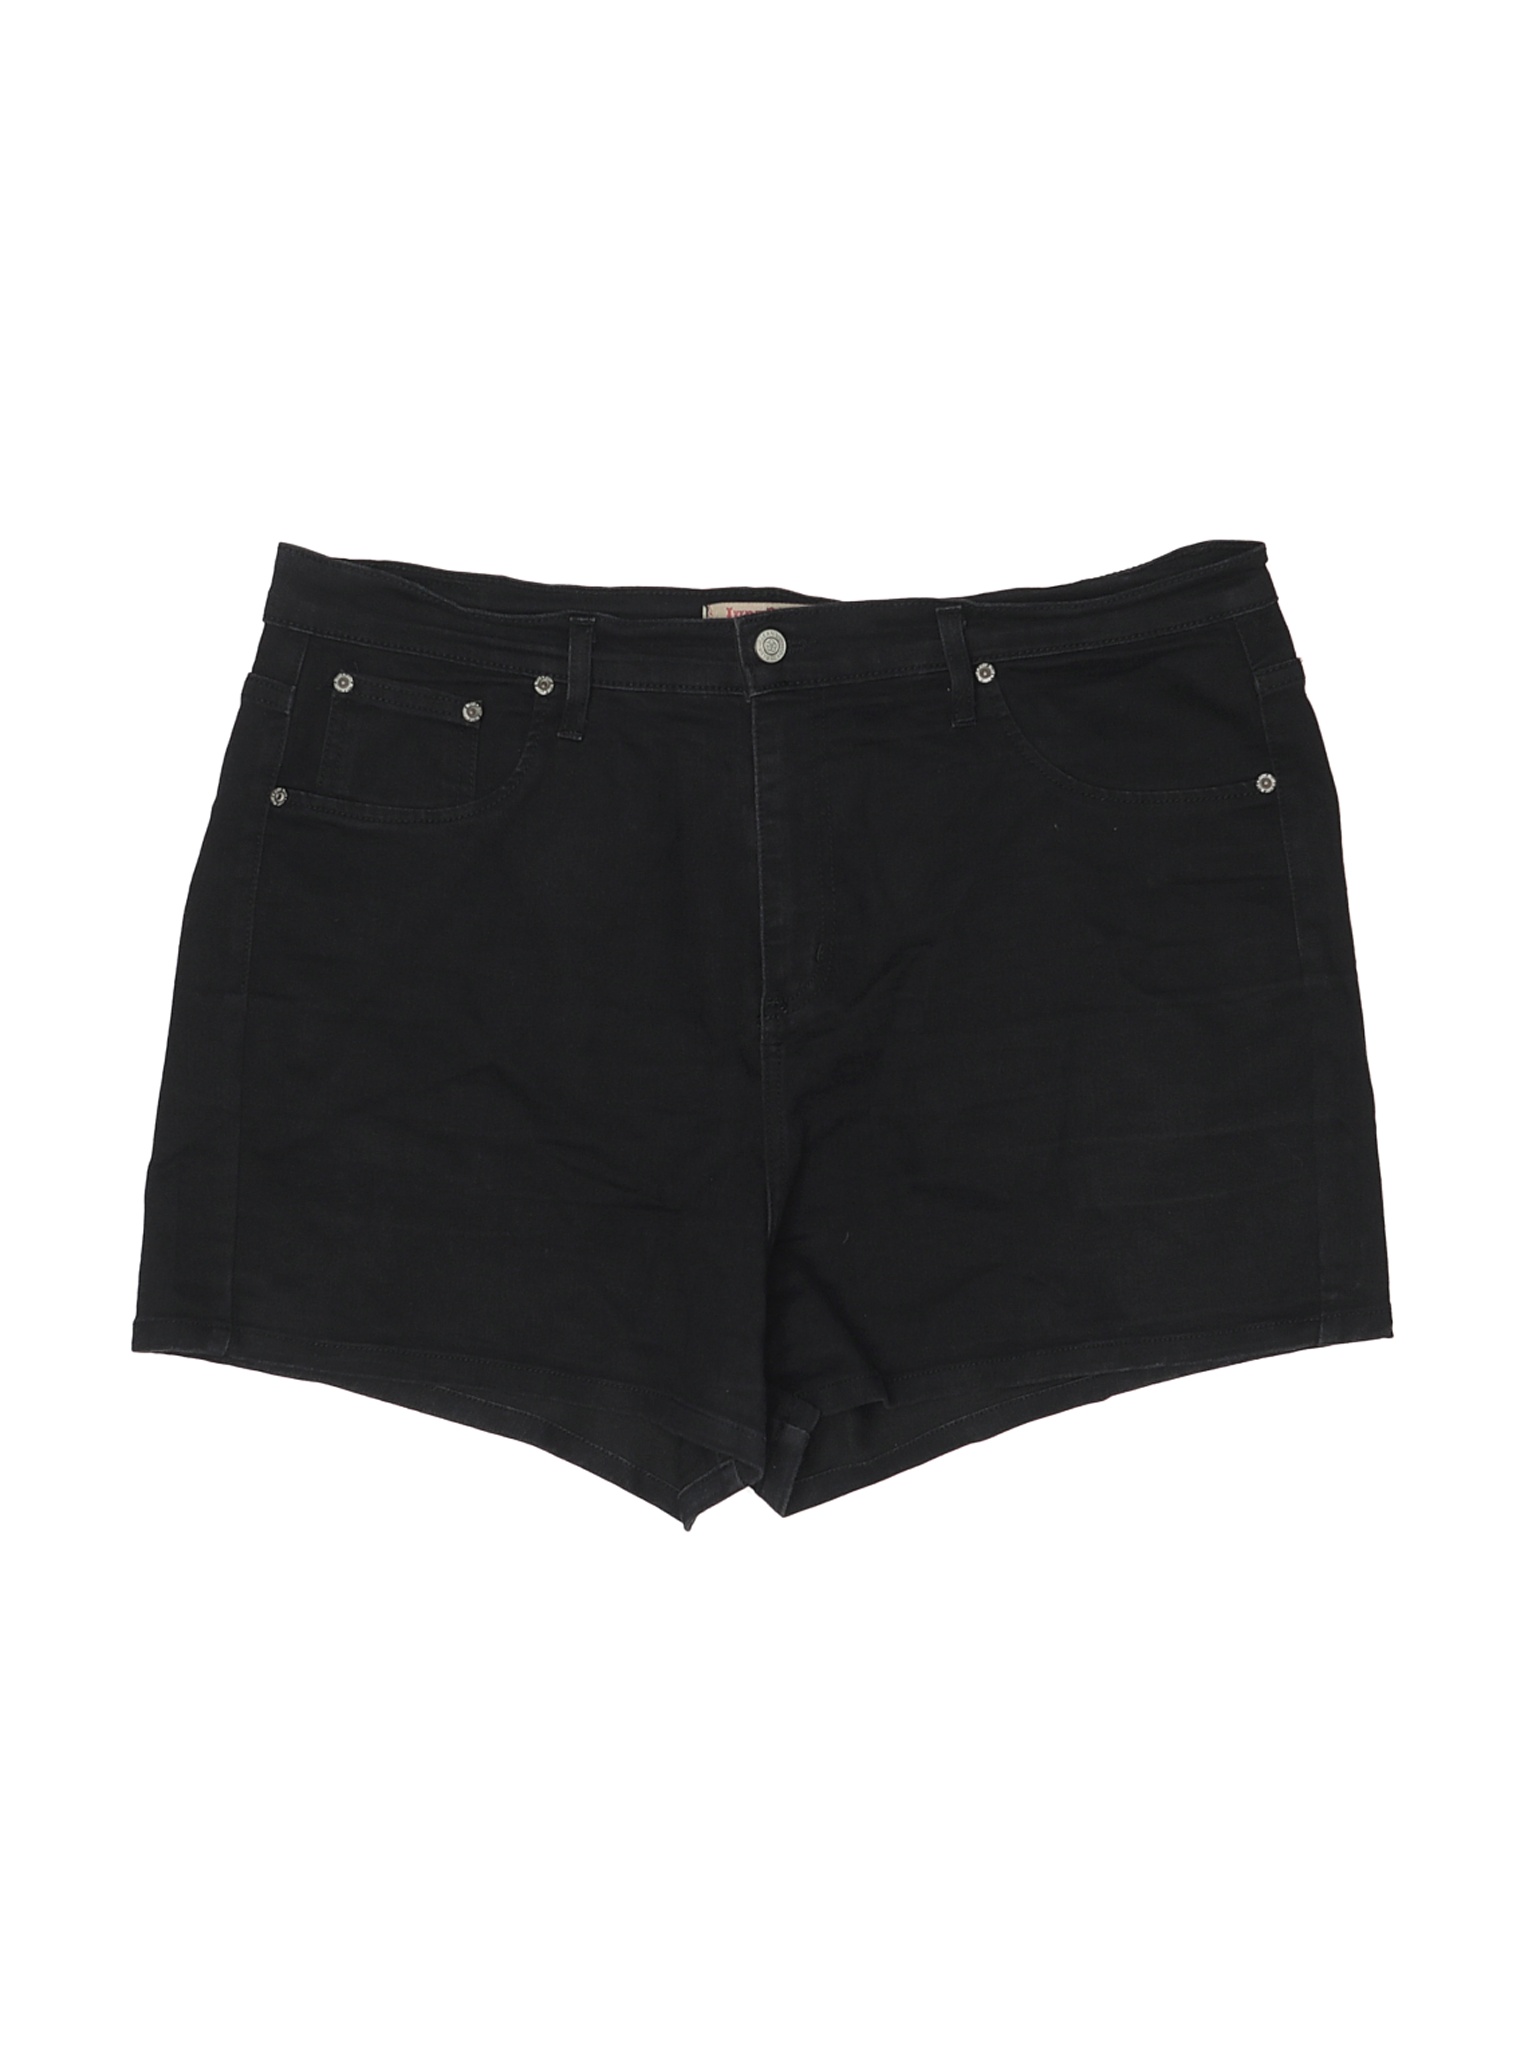 Judy Blue Women Black Denim Shorts 3X Plus | eBay